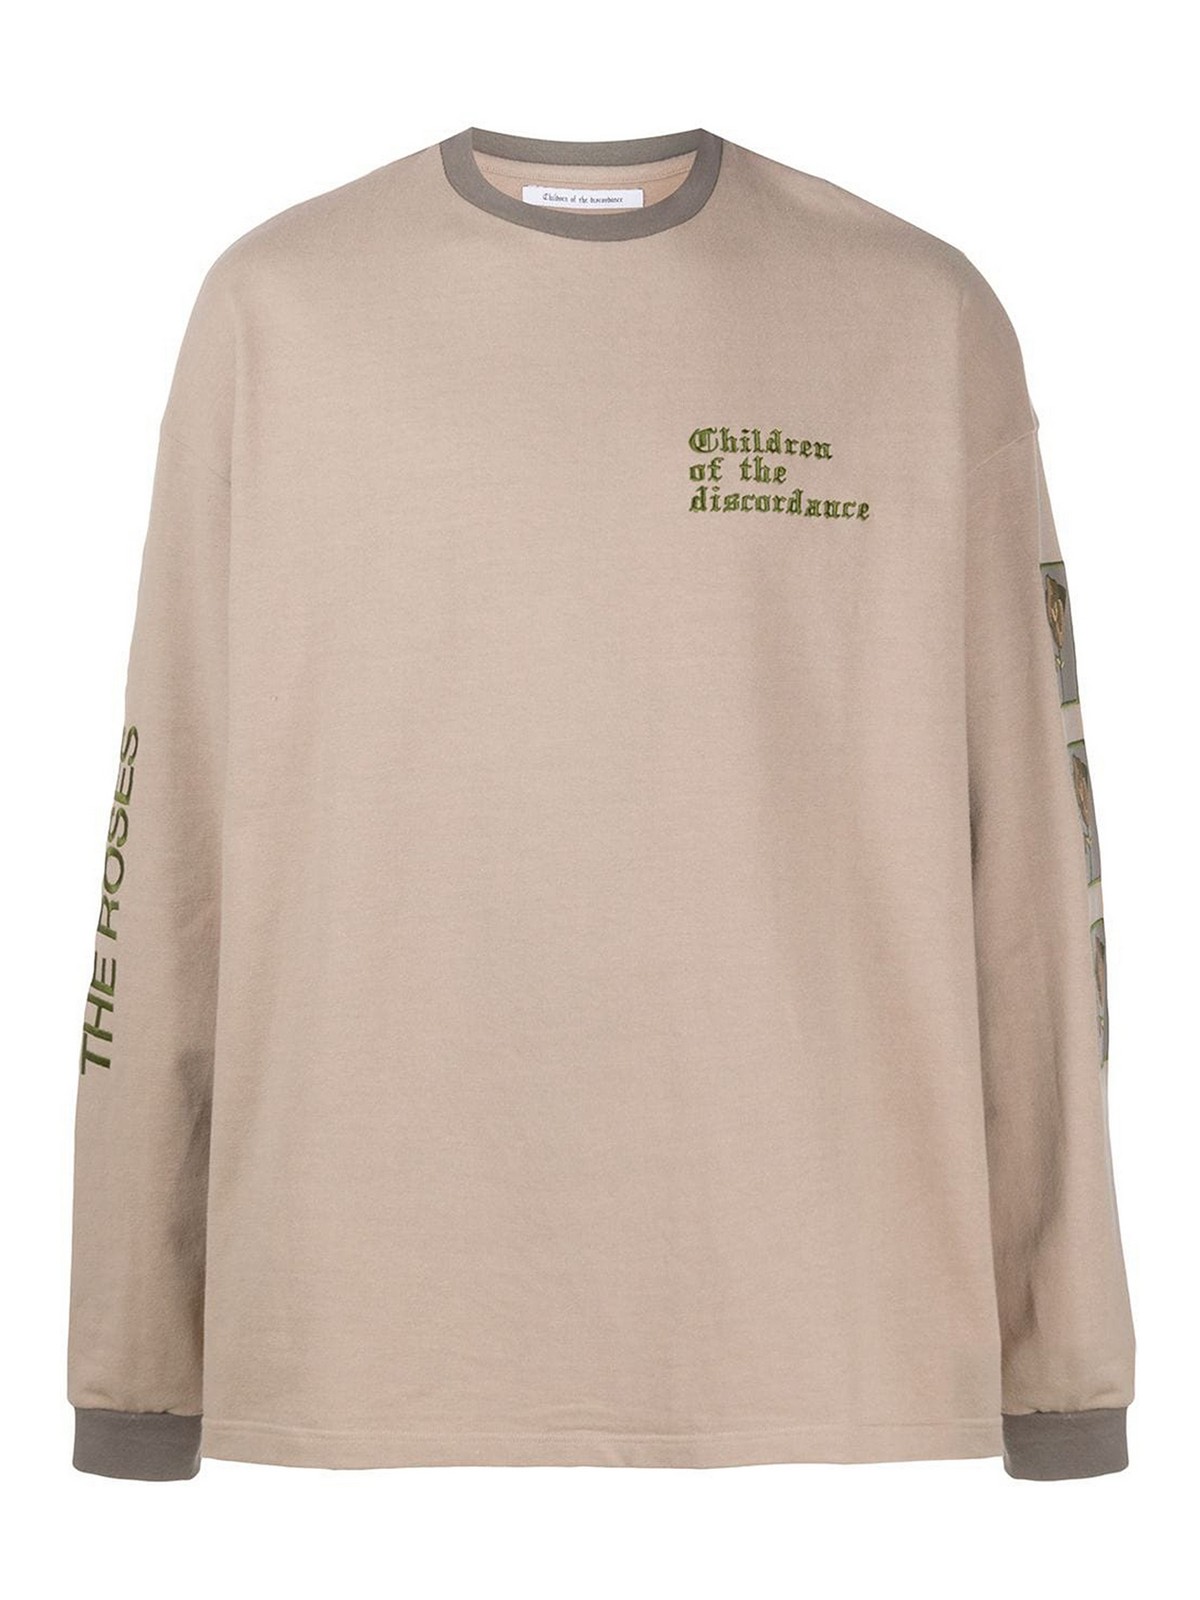 Children Of The Discordance Cotton Embroidered Sweatshirt In Brown